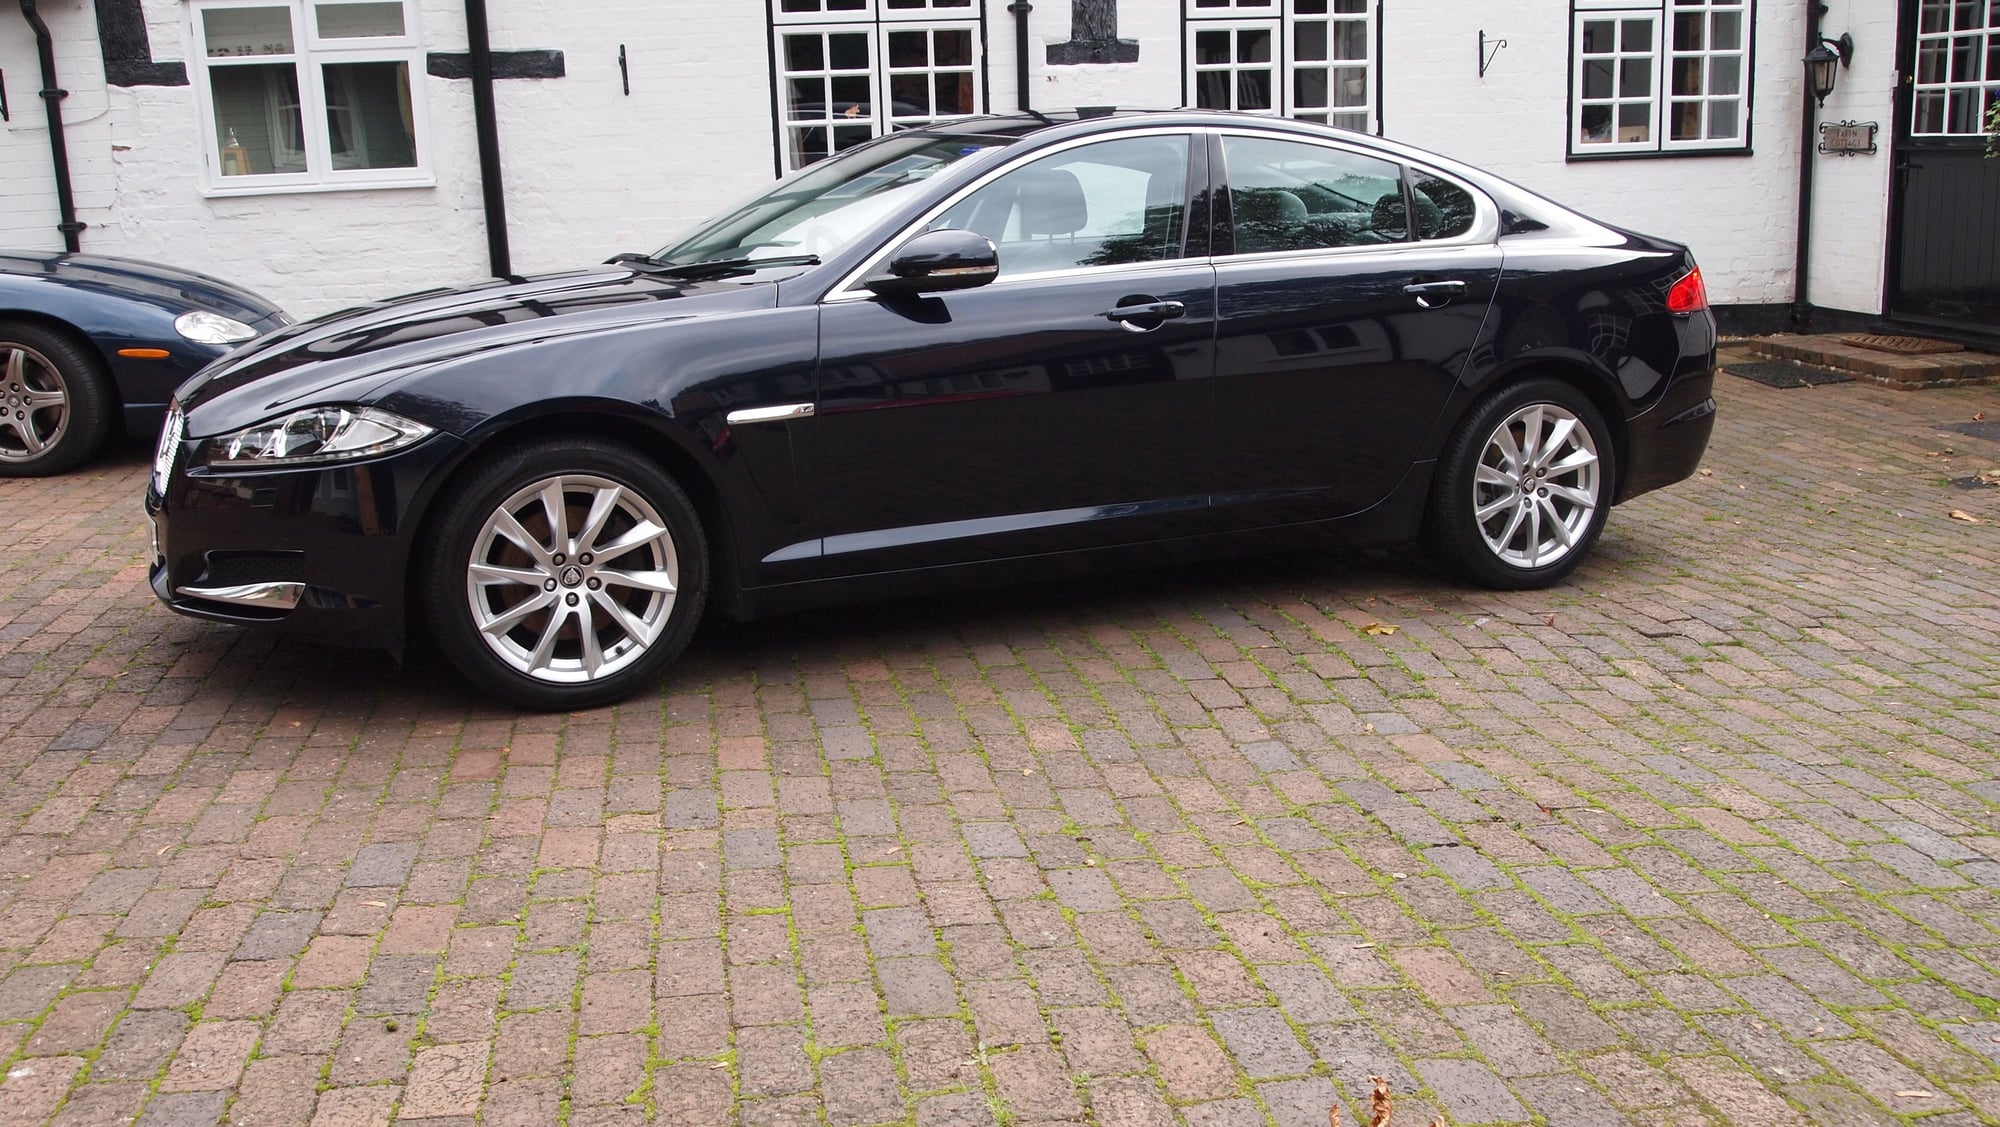 2011 Jaguar XF - Excellent condition, XF 2.2 Diesel Premium Luxury, Azurite blue 129,500 miles - UK - Used - VIN SAJEA71CX4SG01595 - Kidderminster DY11, United Kingdom